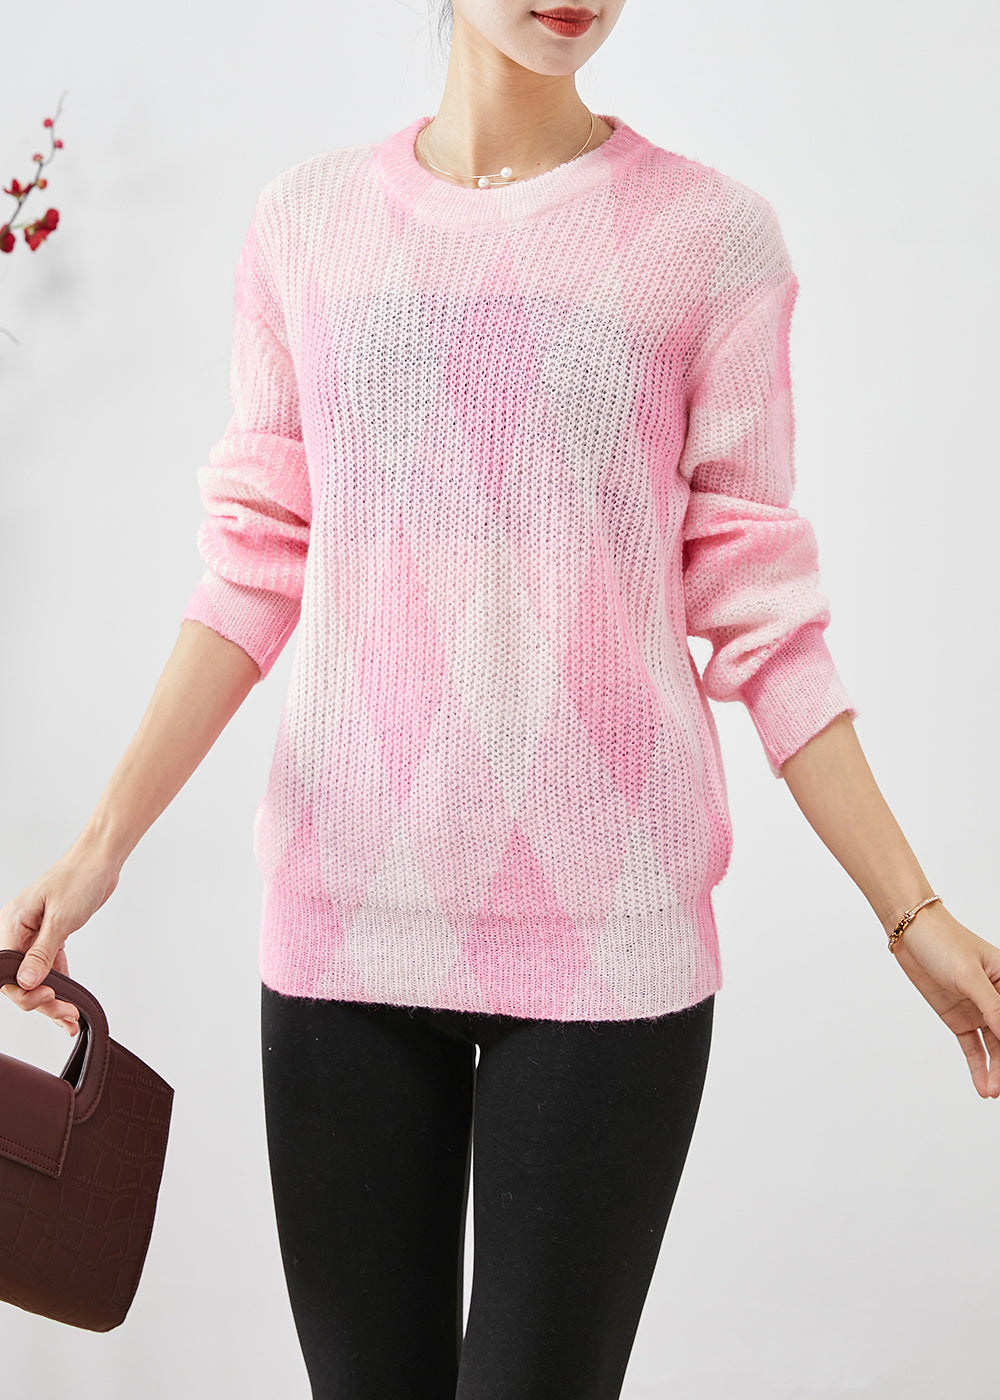 Cute Pink Oversized Plaid Knit Sweaters Fall